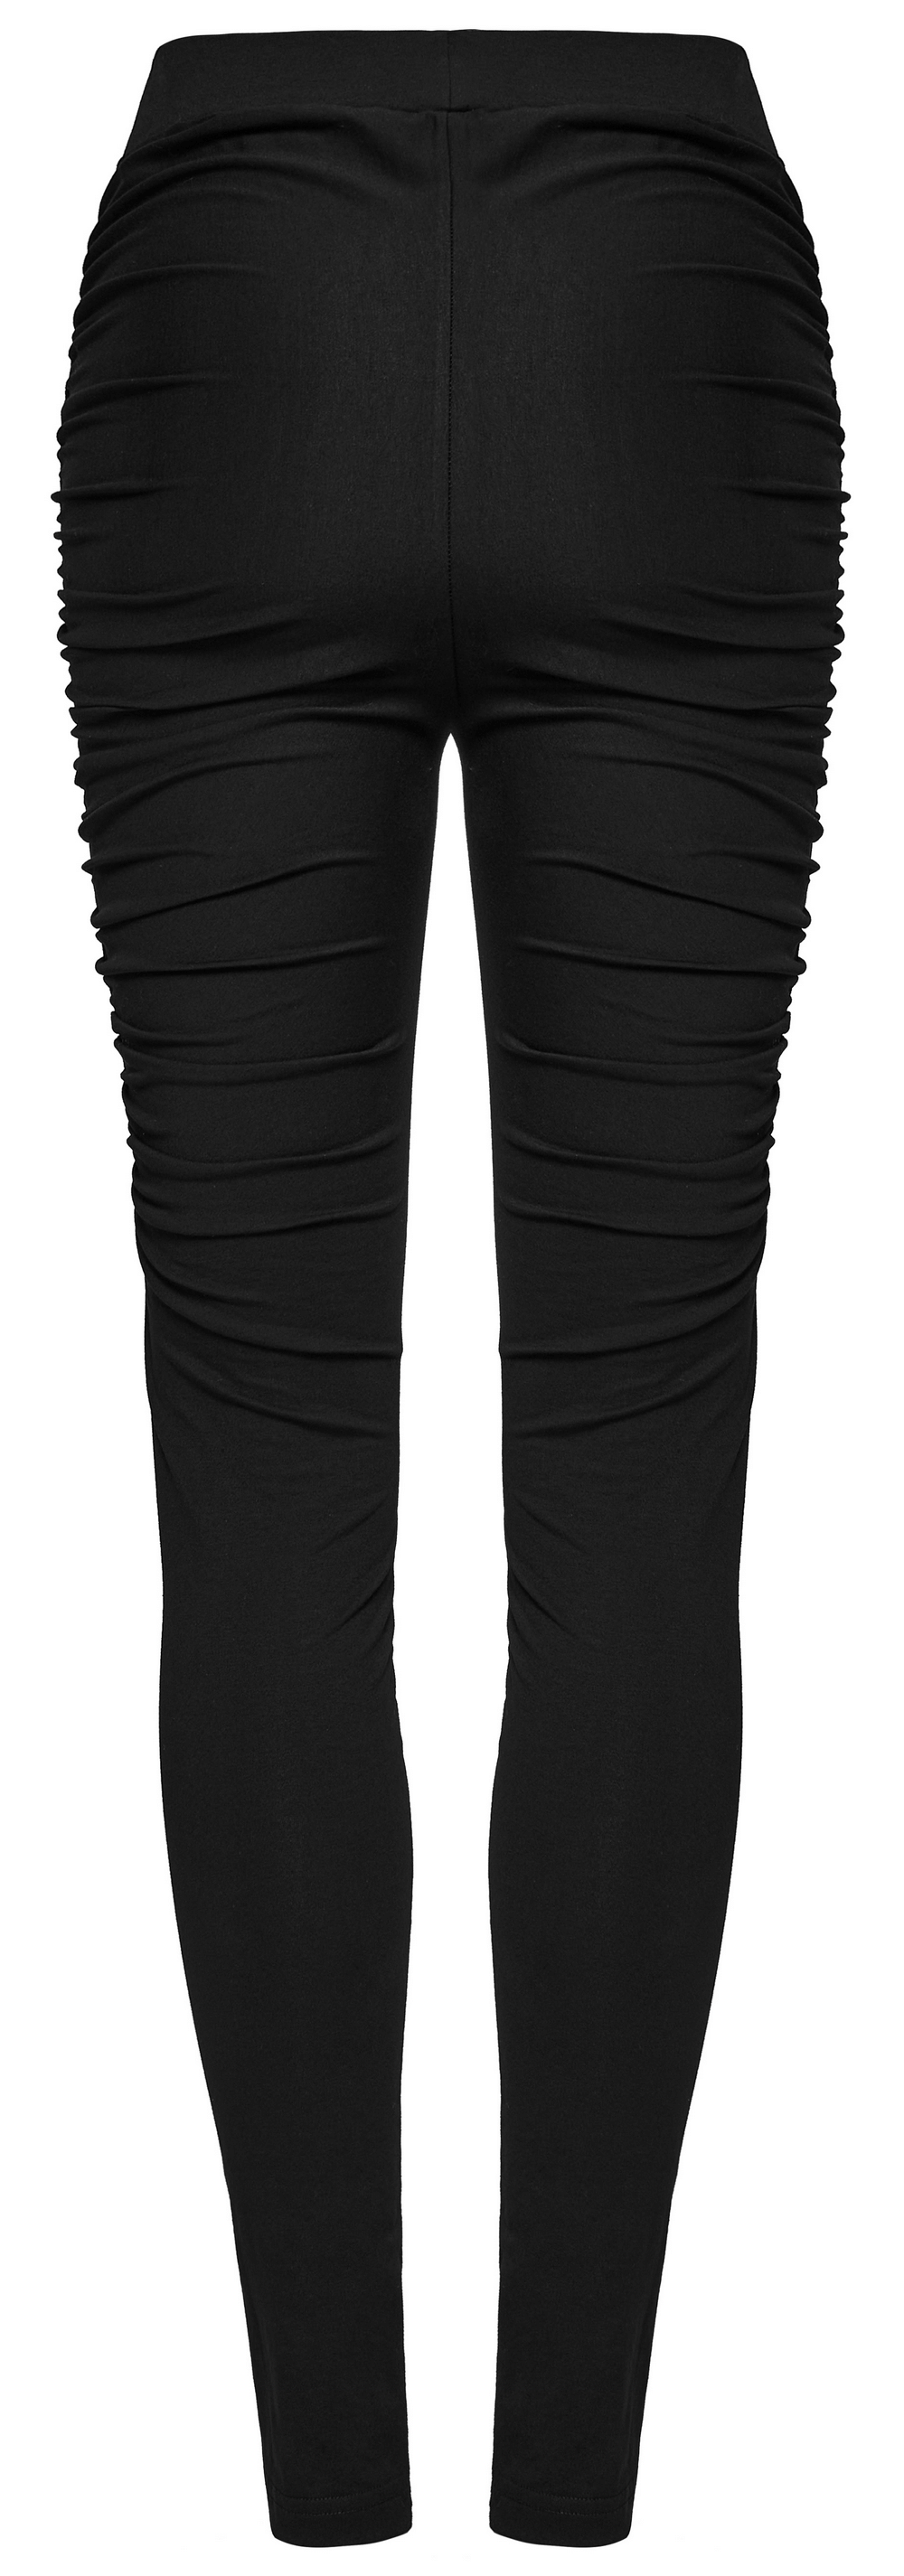 Women's Punk Black Leggings with Edgy Studded Pleats